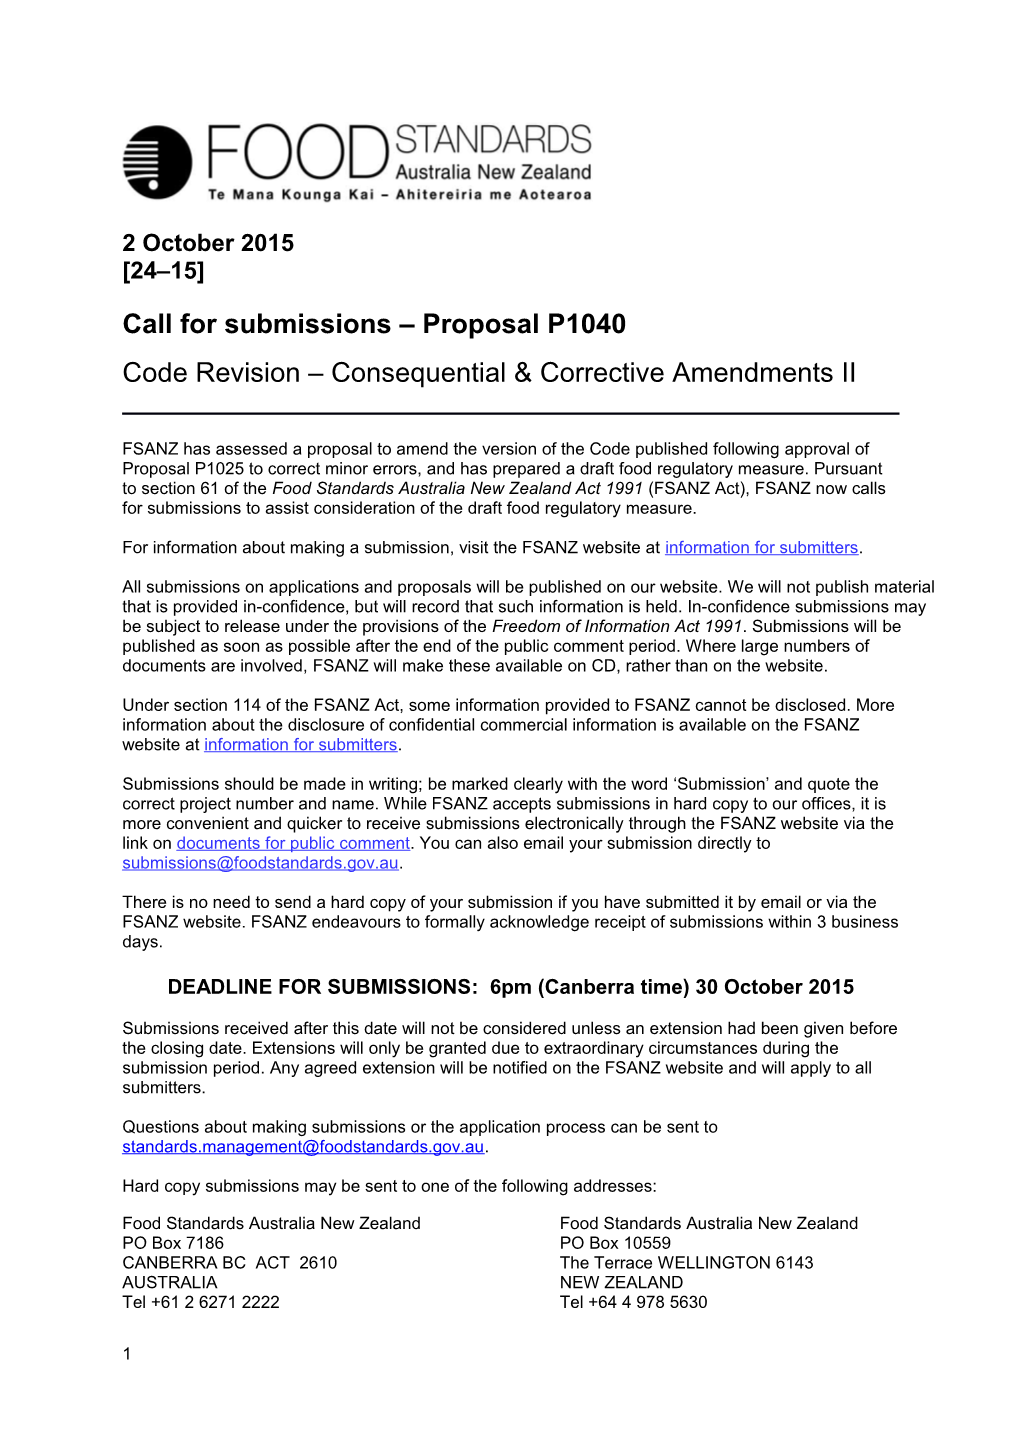 Code Revision Consequential & Corrective Amendments II